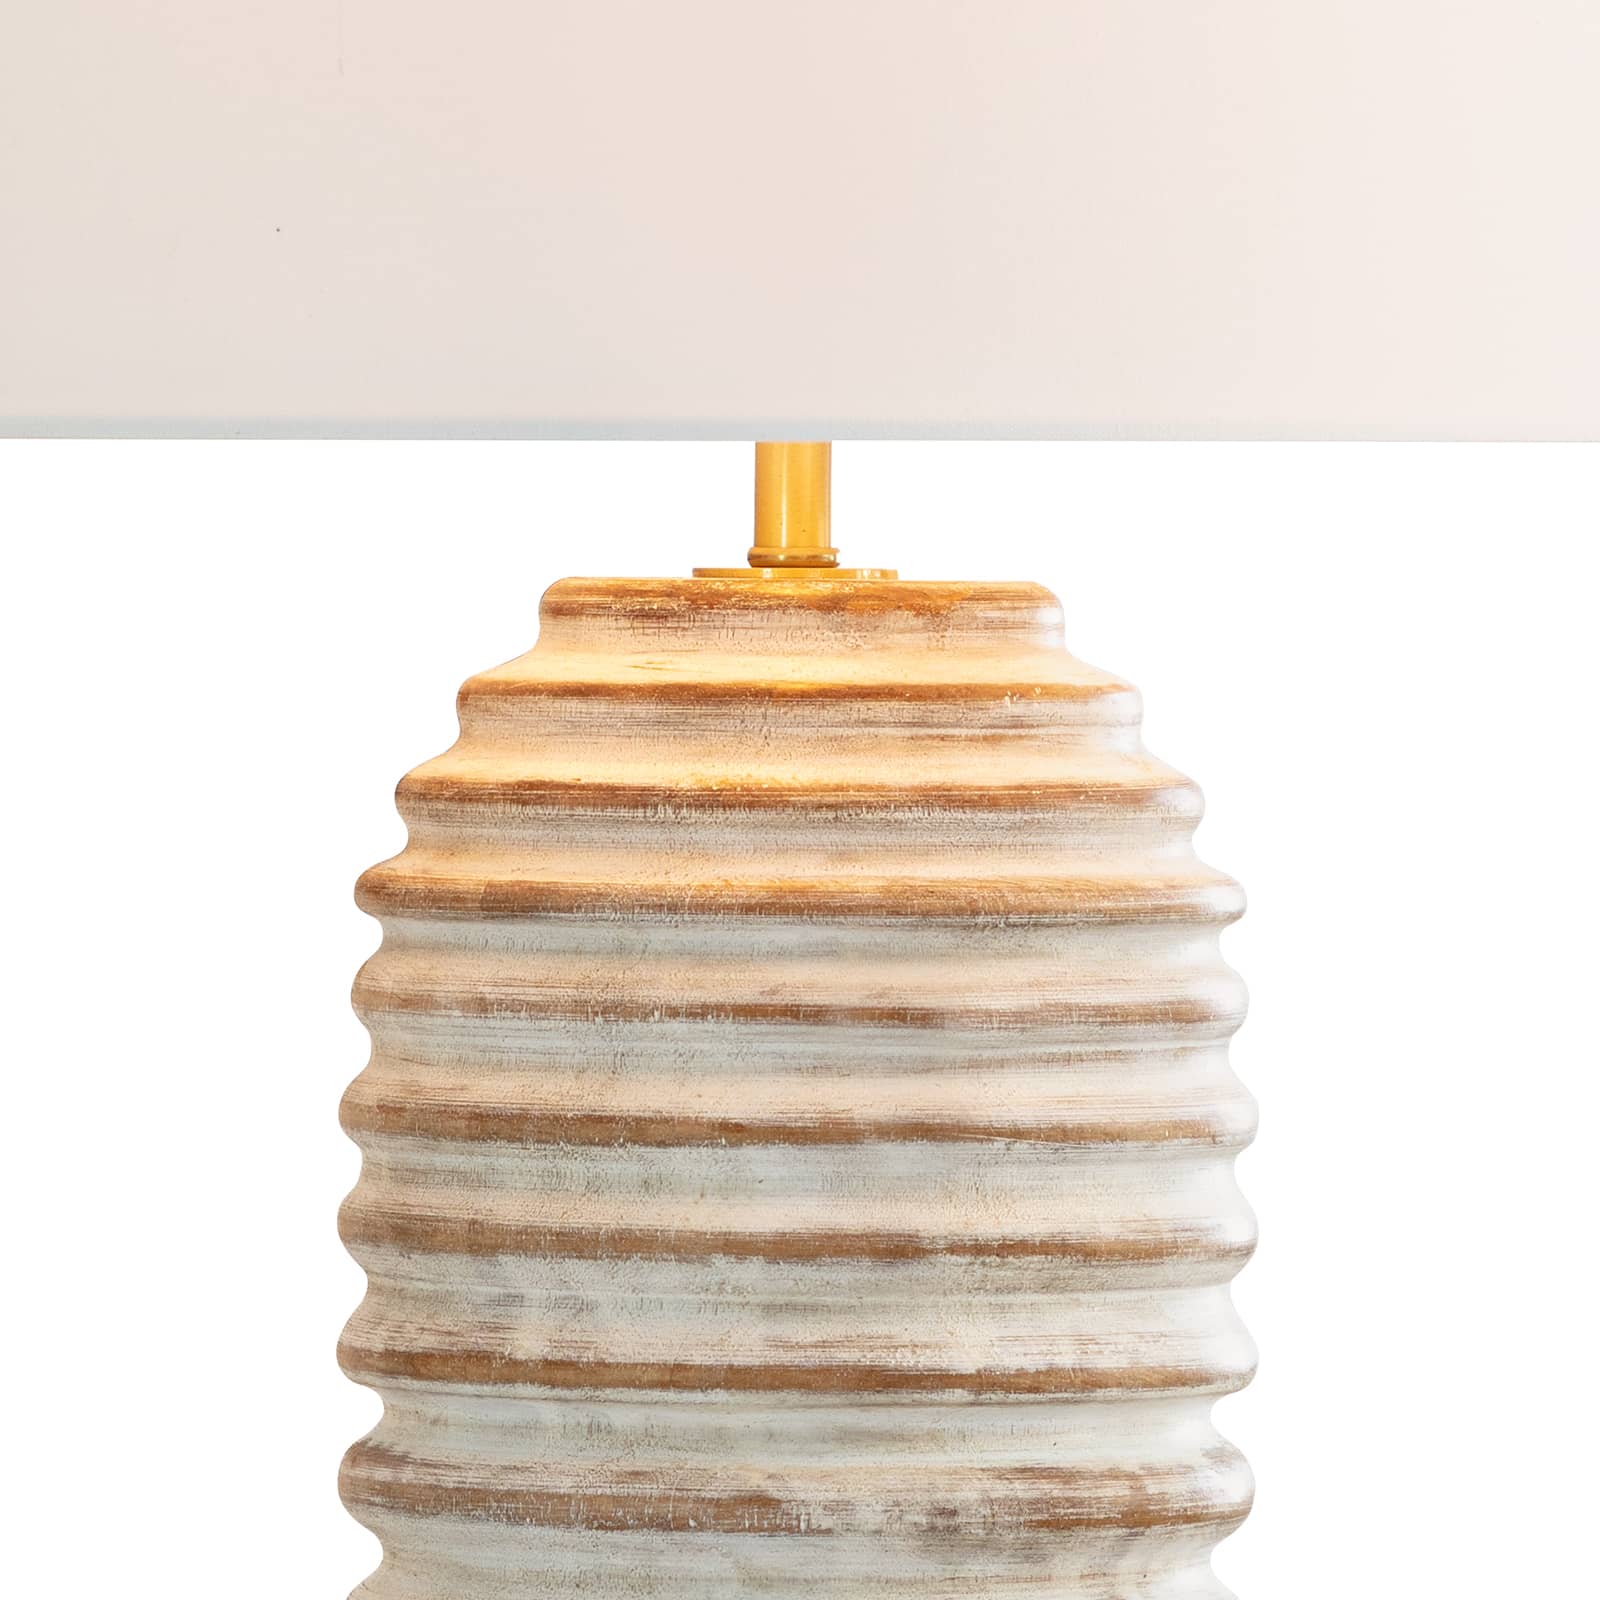 Regina Andrew Carmel Wood Table Lamp